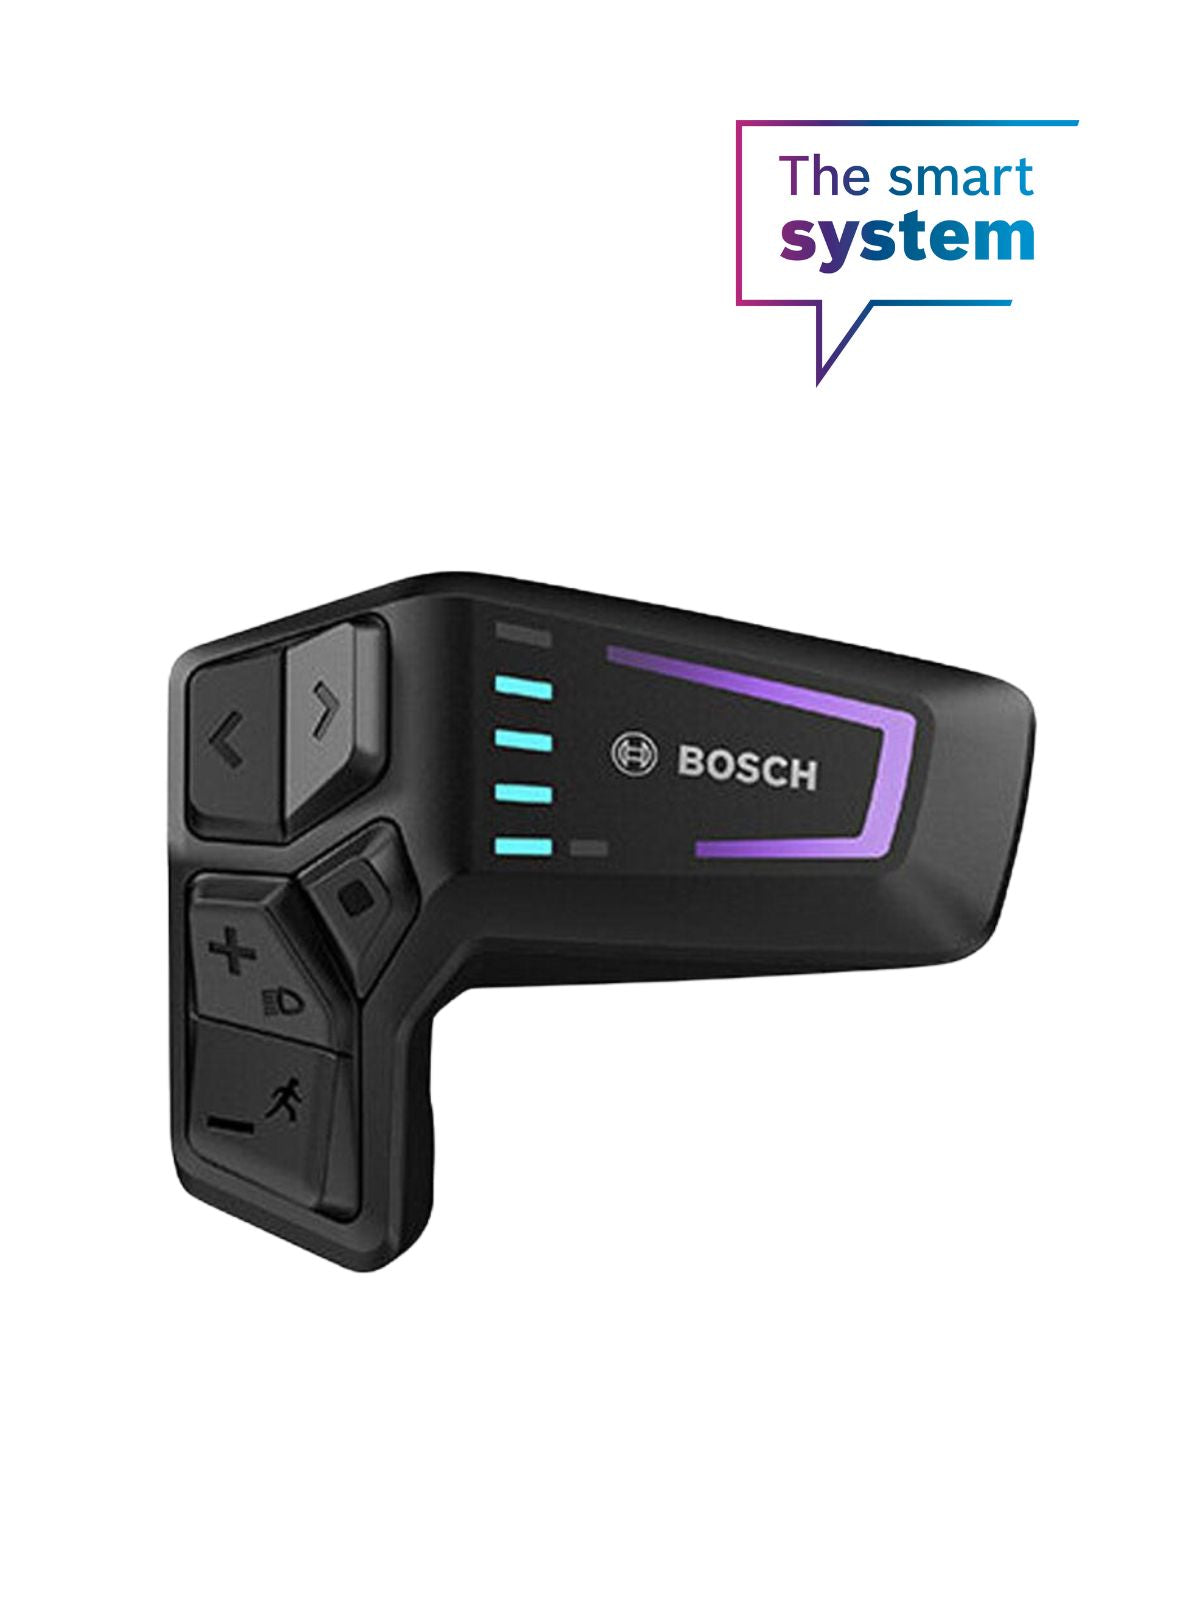 Bosch Led Remote smart system